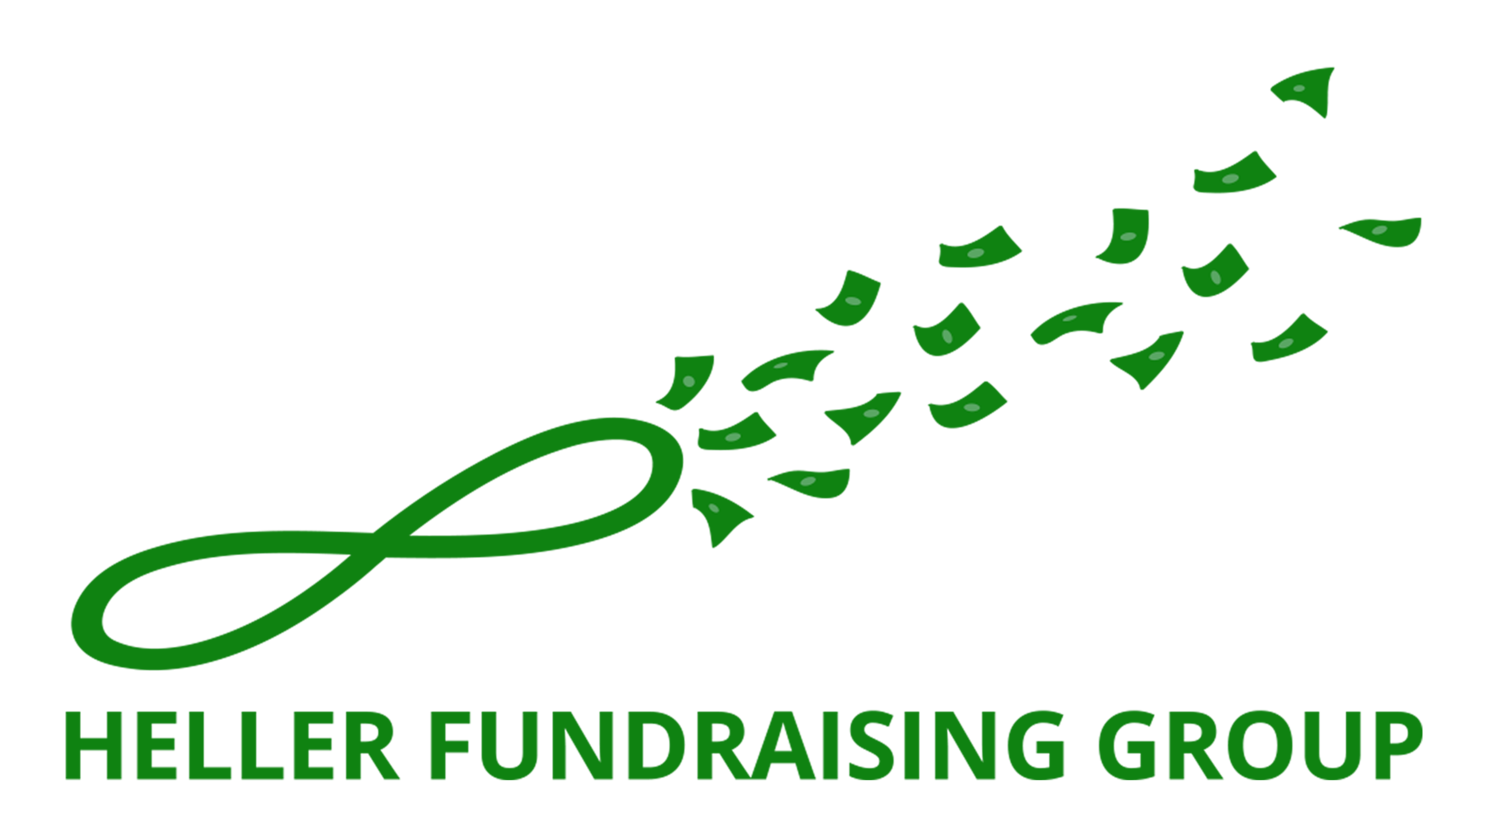 Heller Fundraising Group LOGO 2021